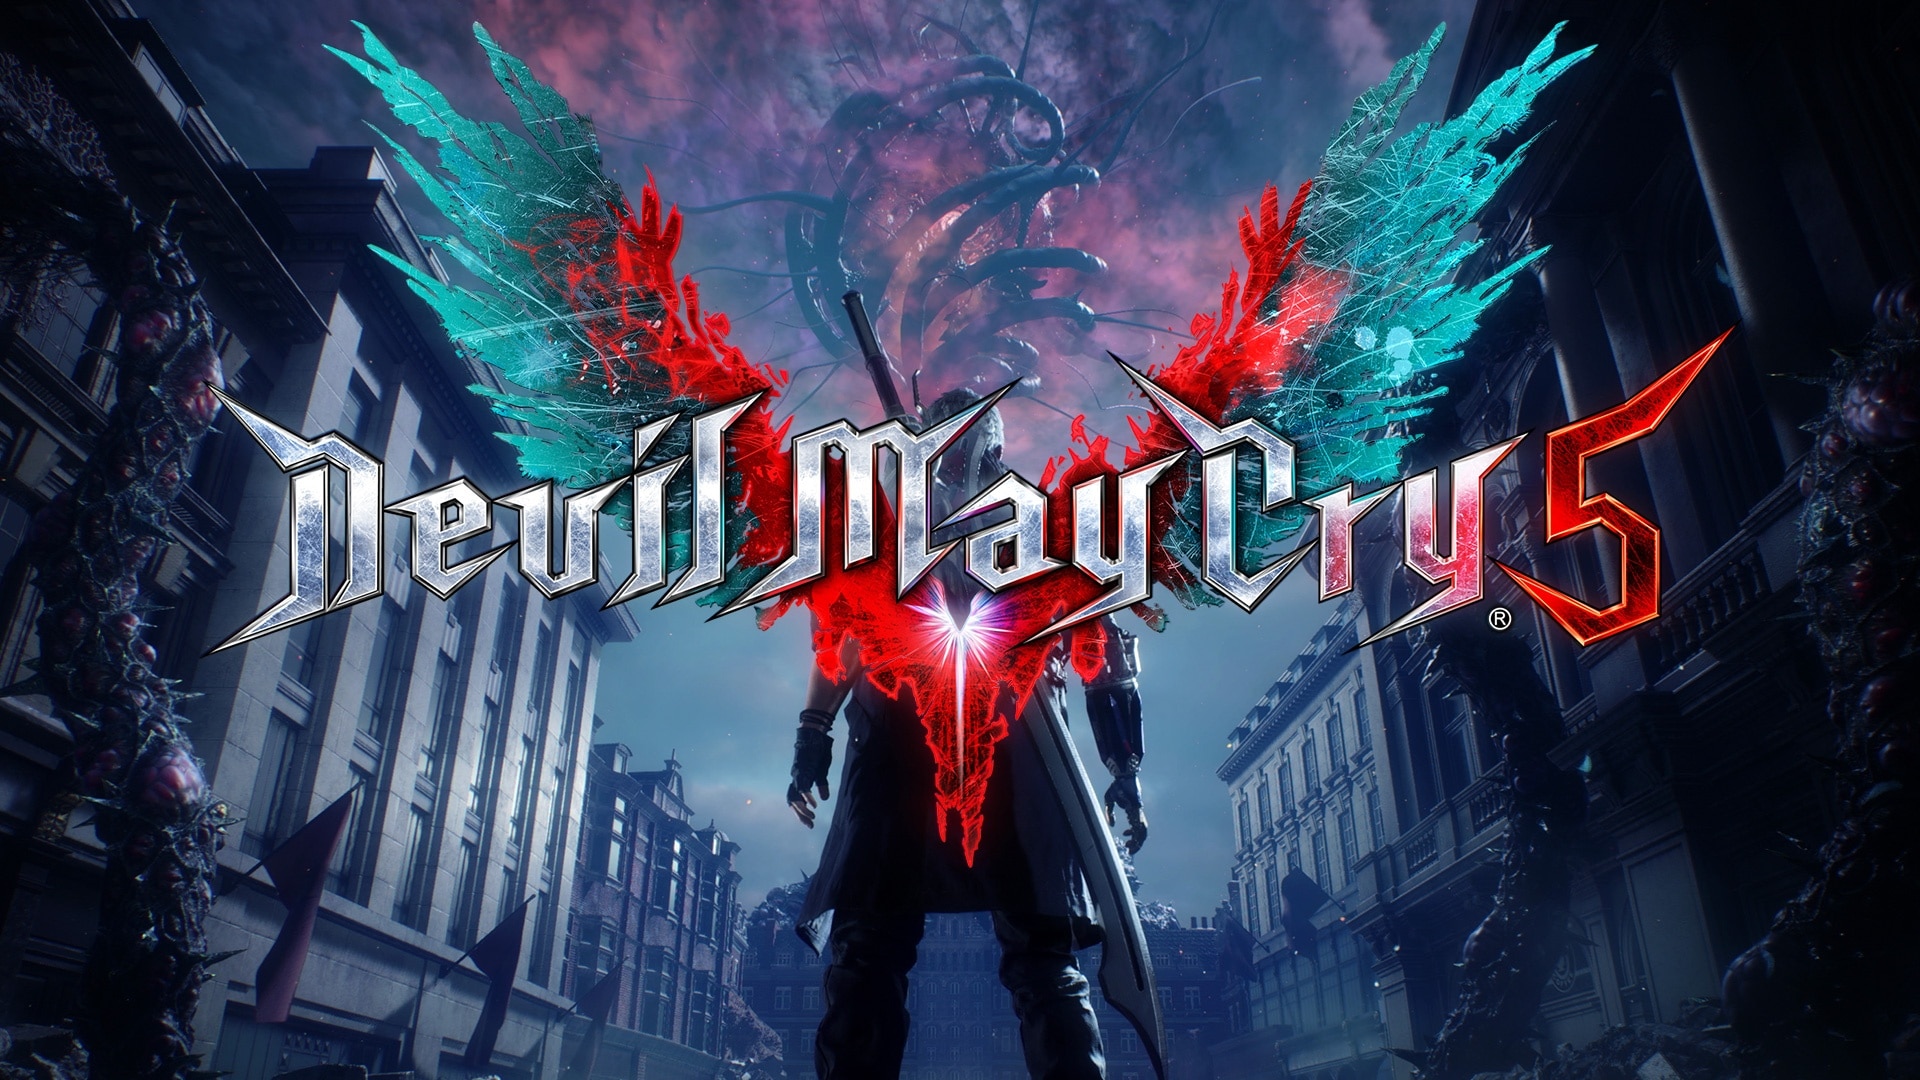 Devil May Cry 5, capcom, demo